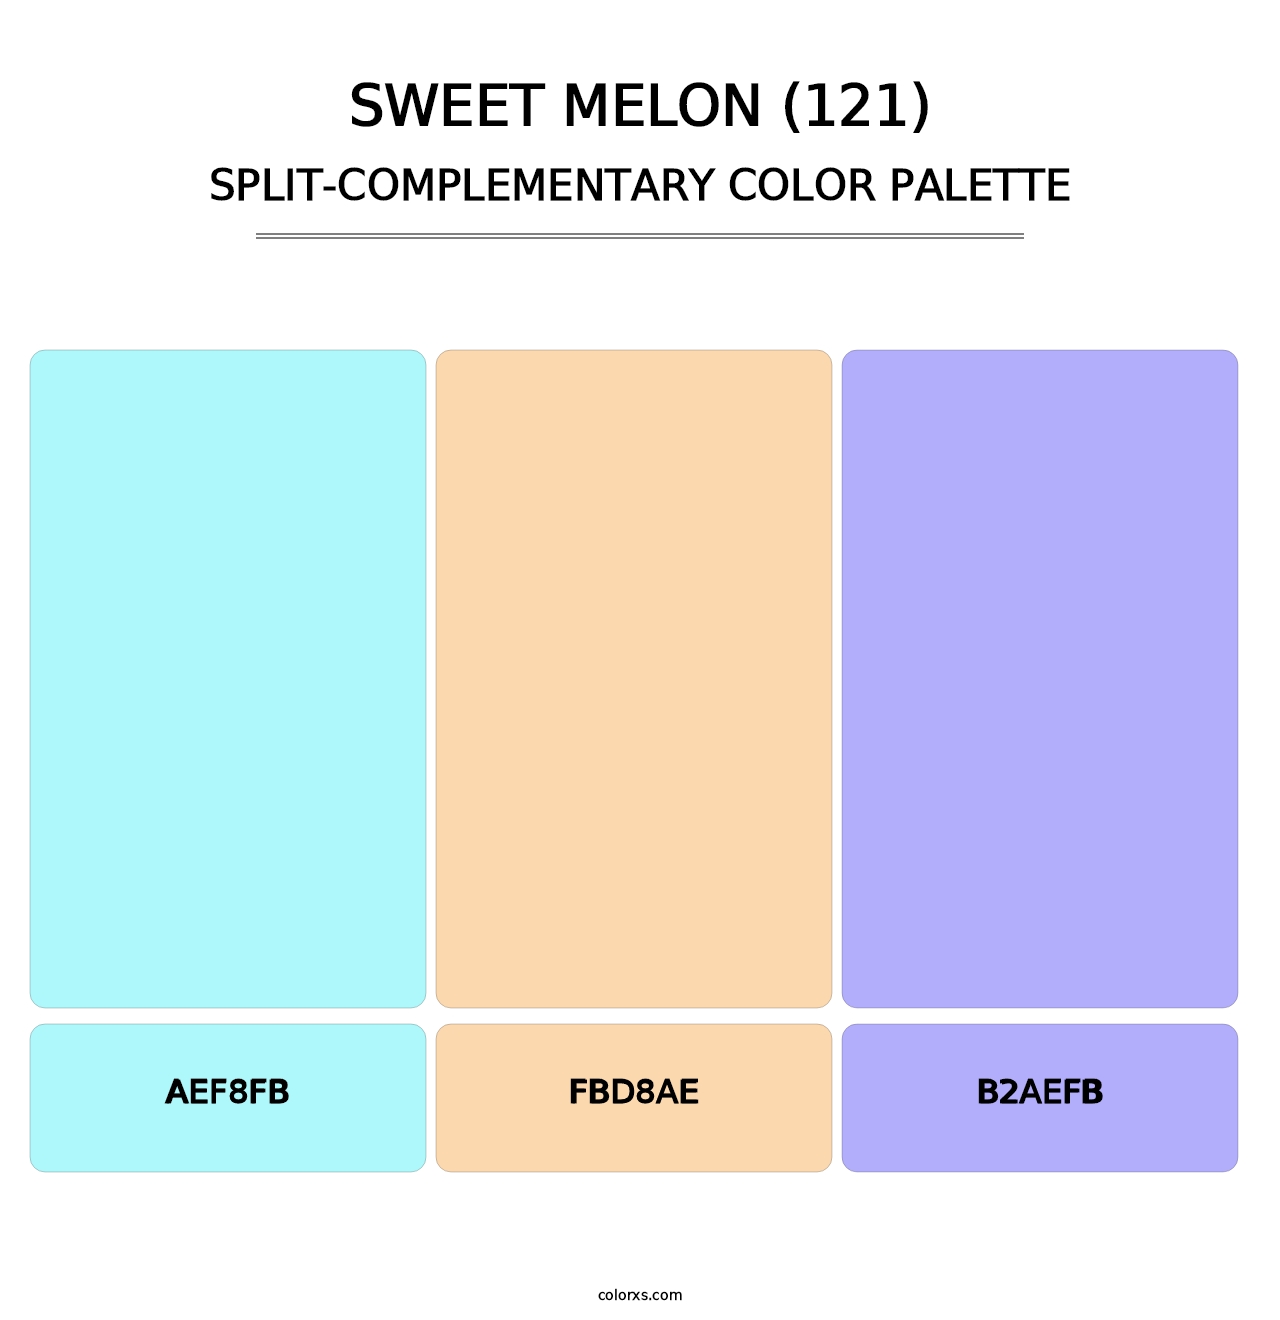 Sweet Melon (121) - Split-Complementary Color Palette